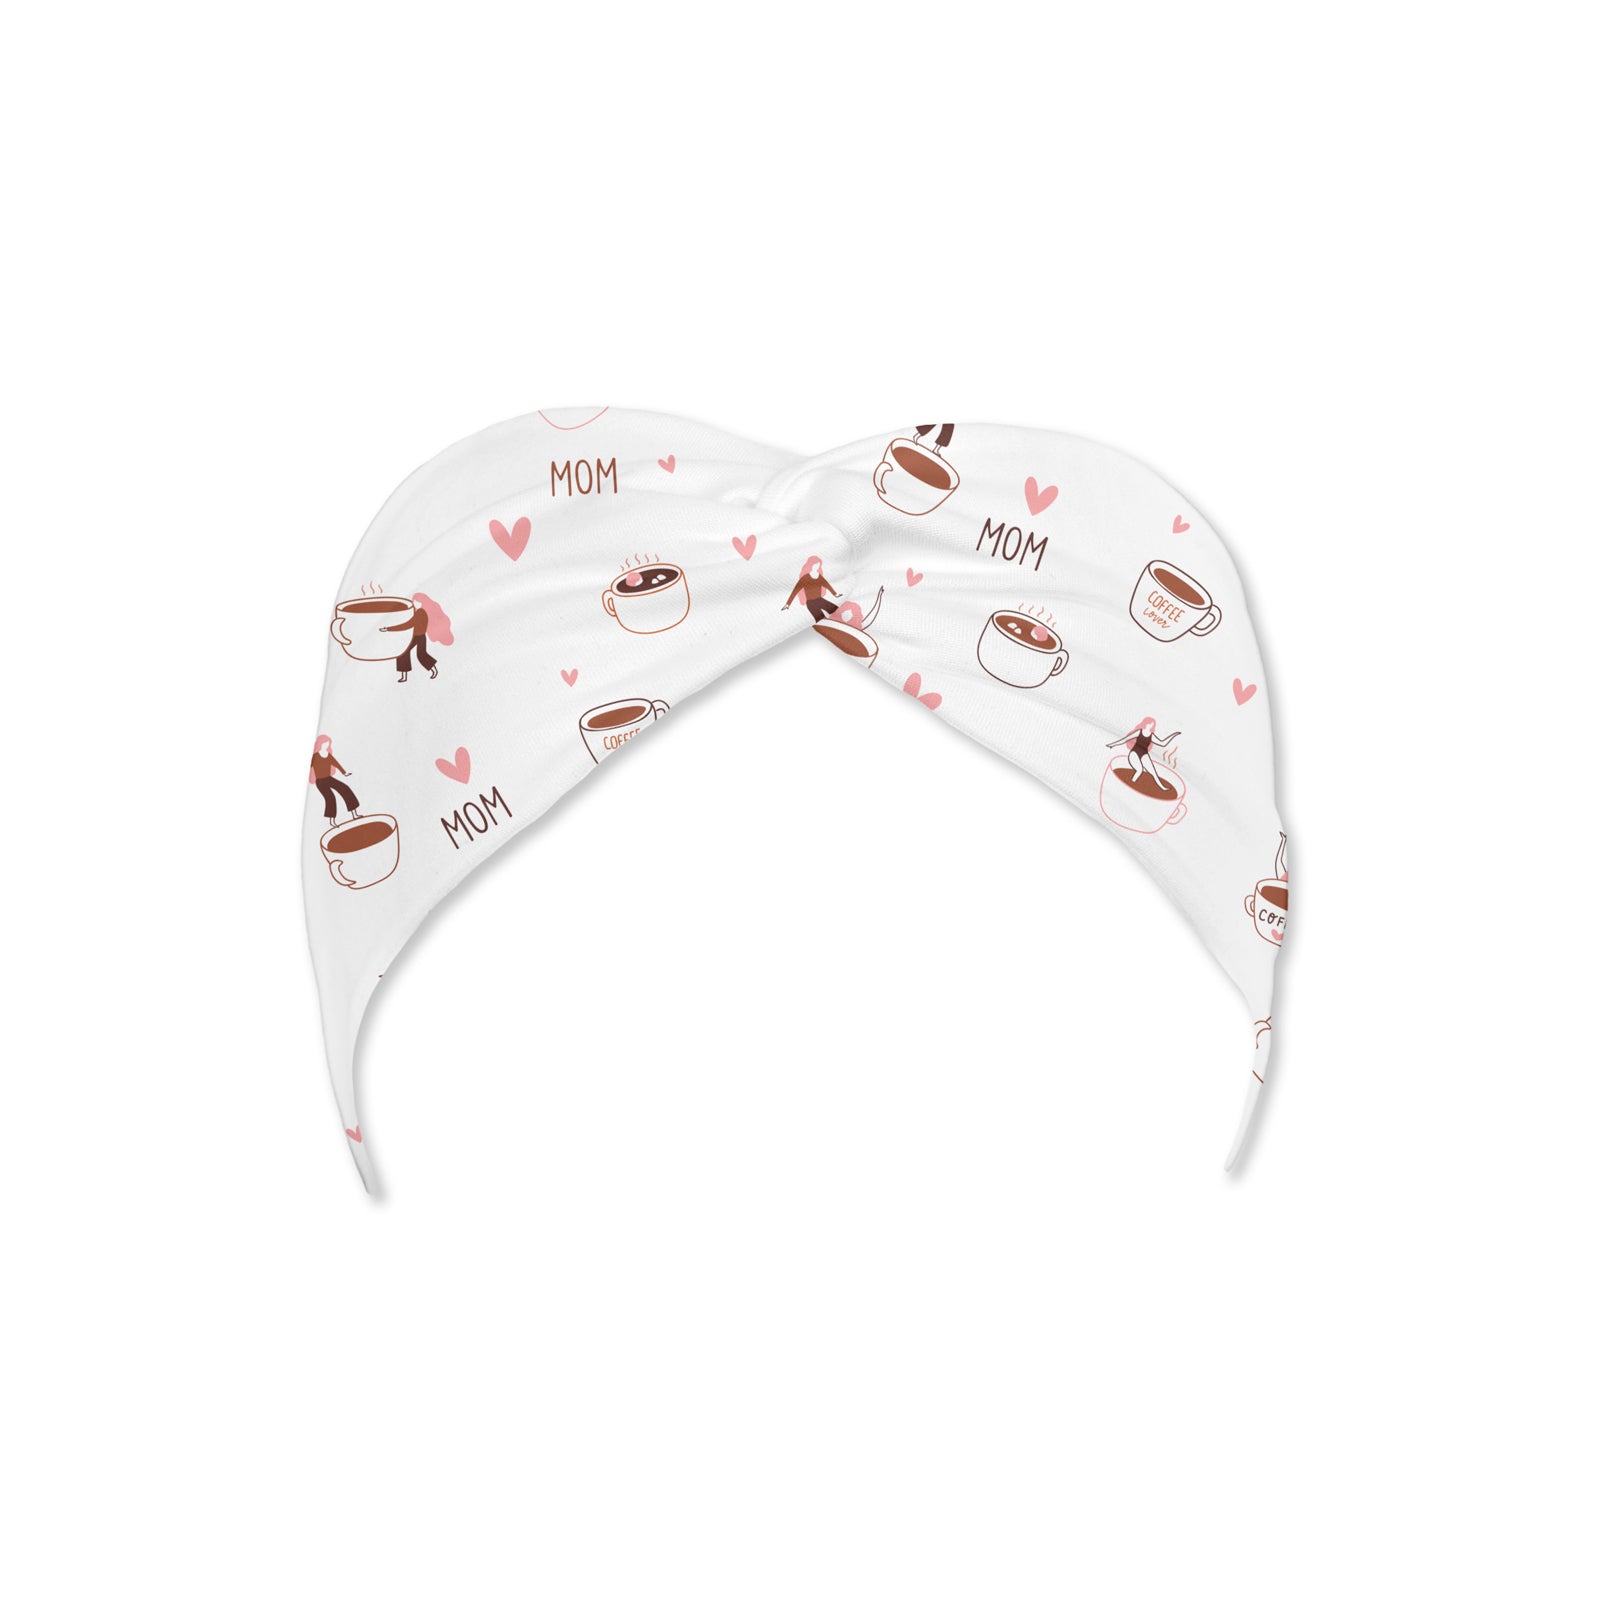 Personalized Spa Headband